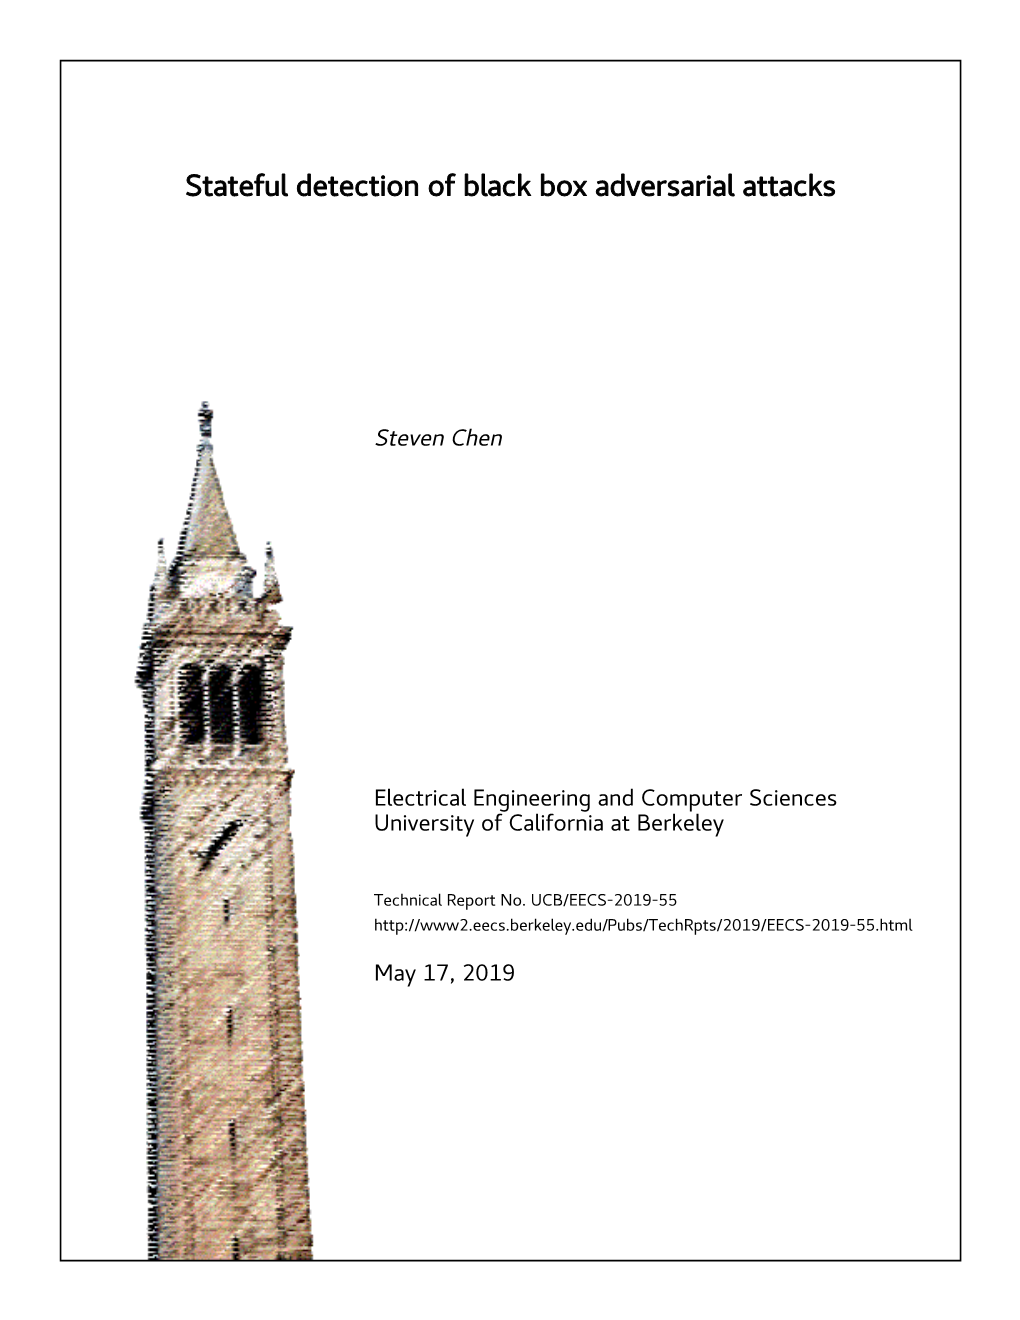 Stateful Detection of Black Box Adversarial Attacks